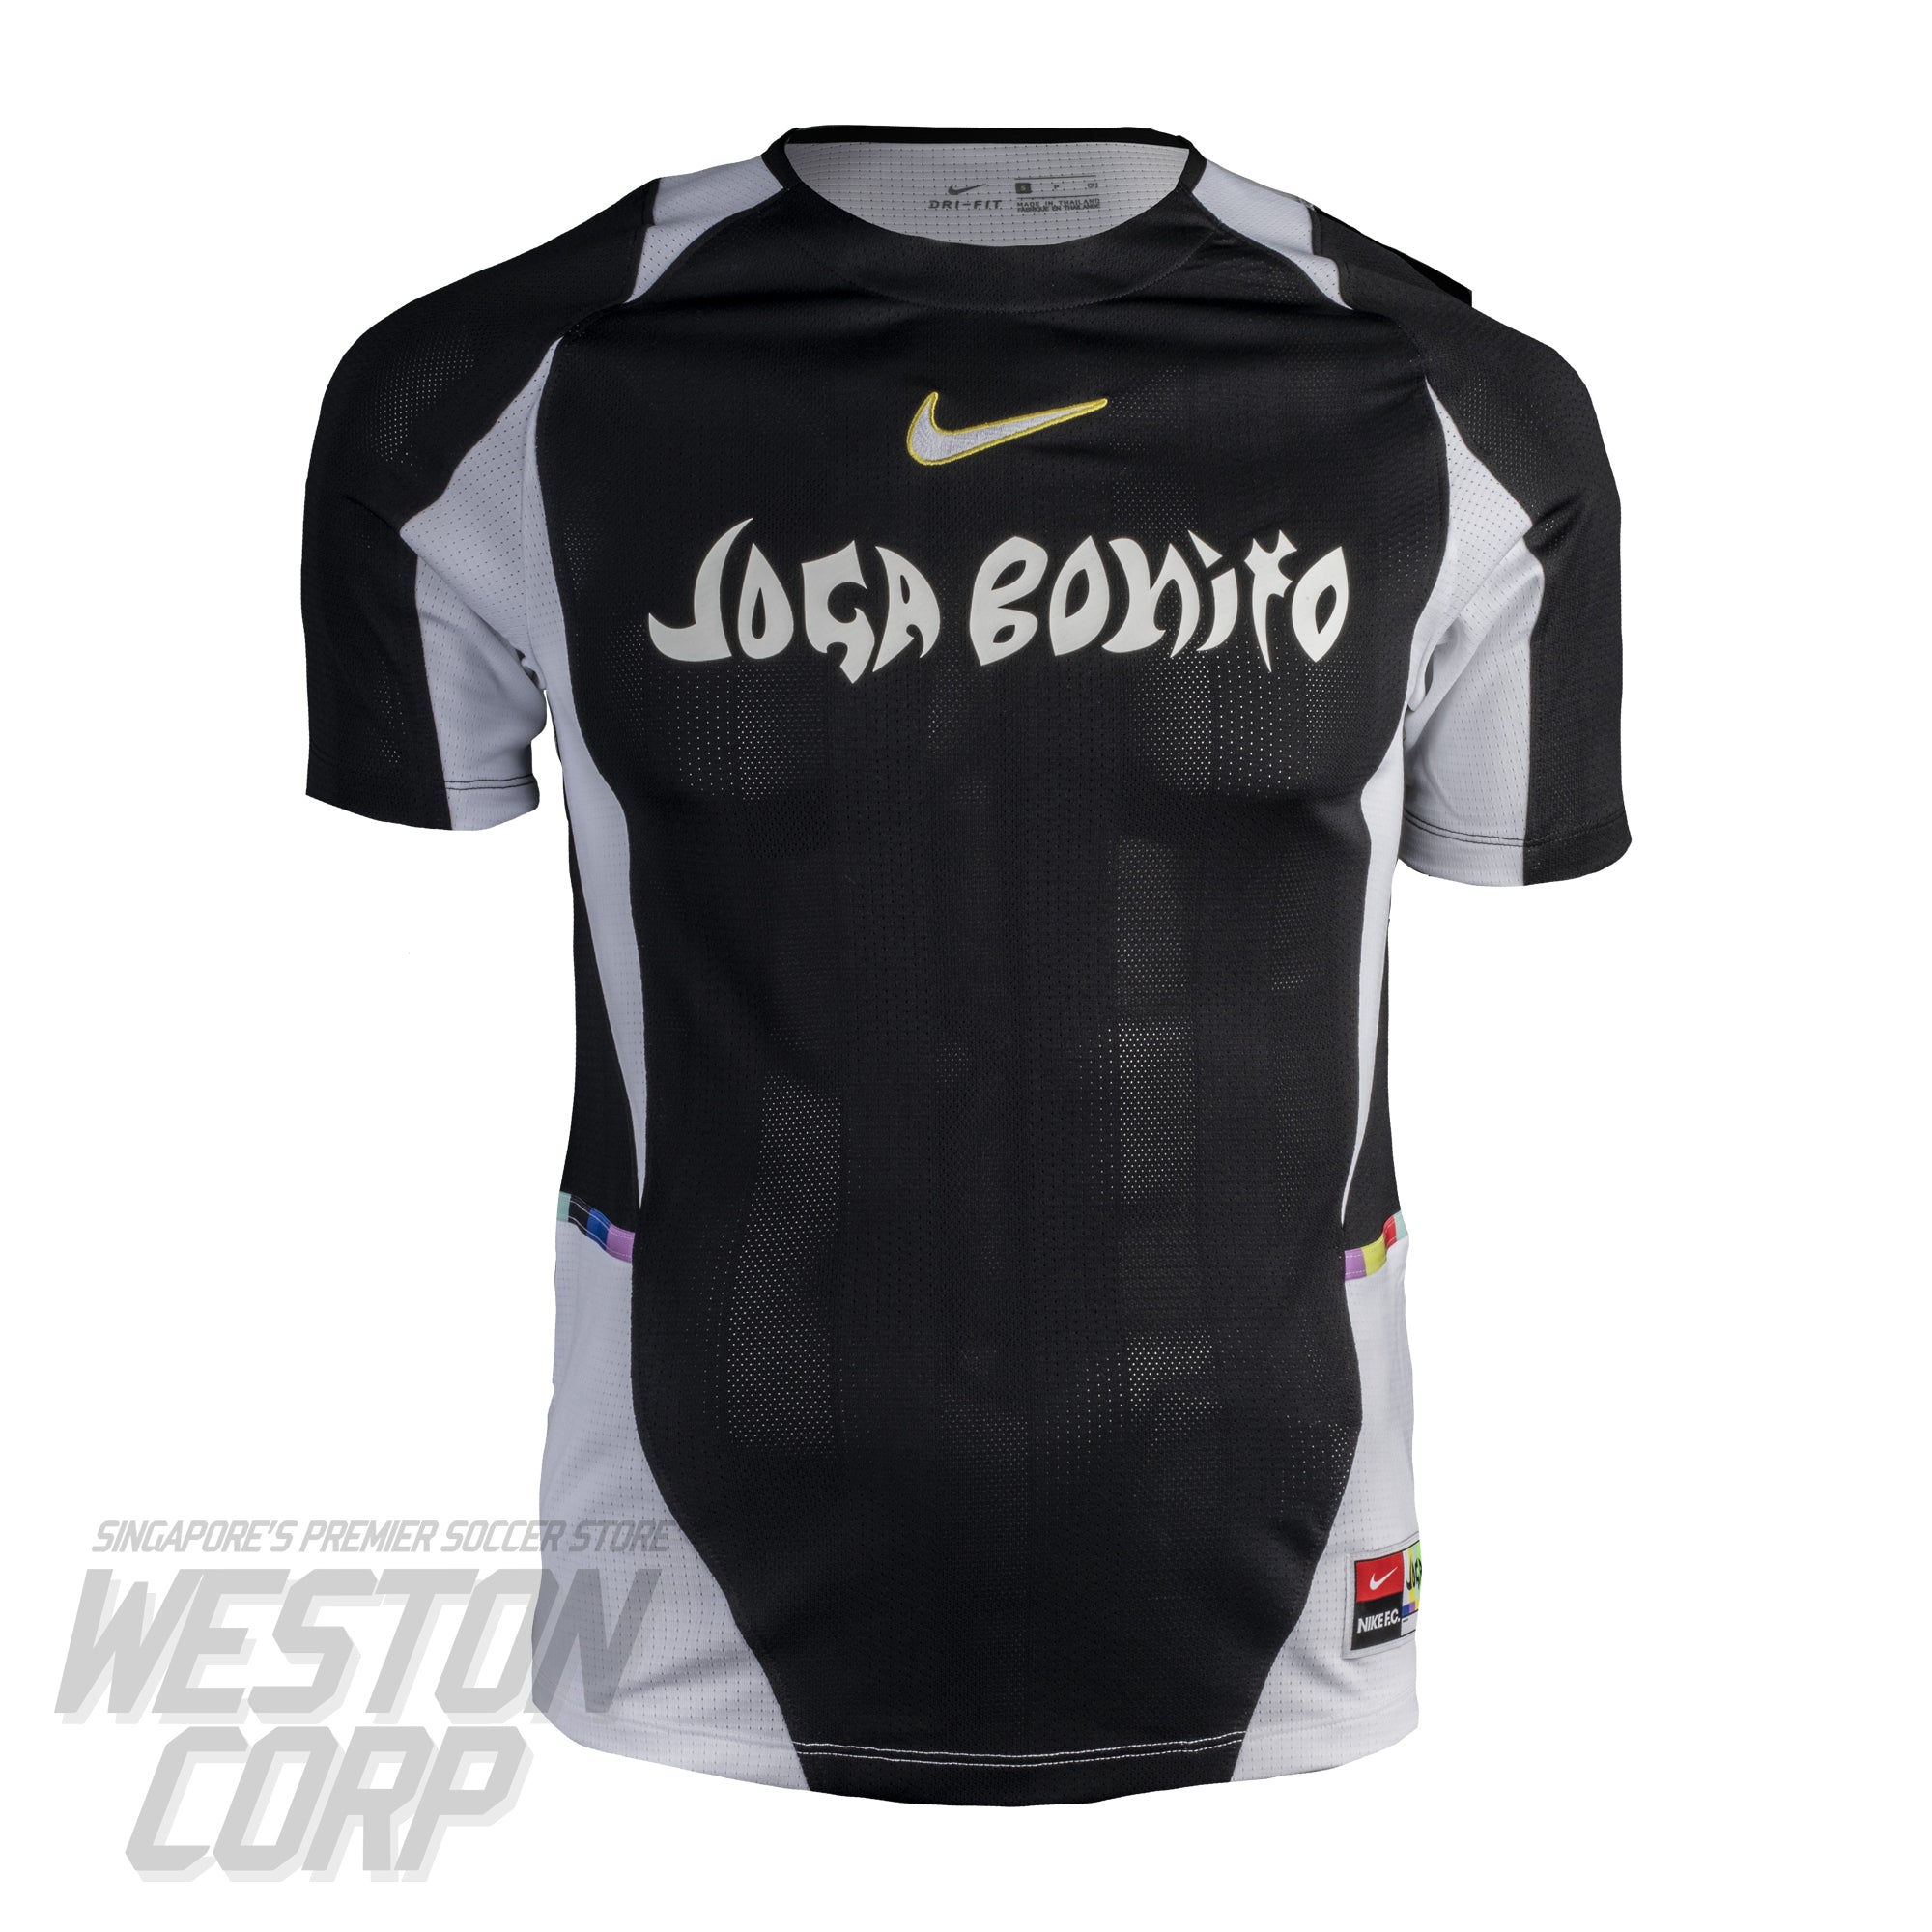 Nike FC Lifestyle Joga Bonito Jersey - Game Royal - SoccerPro